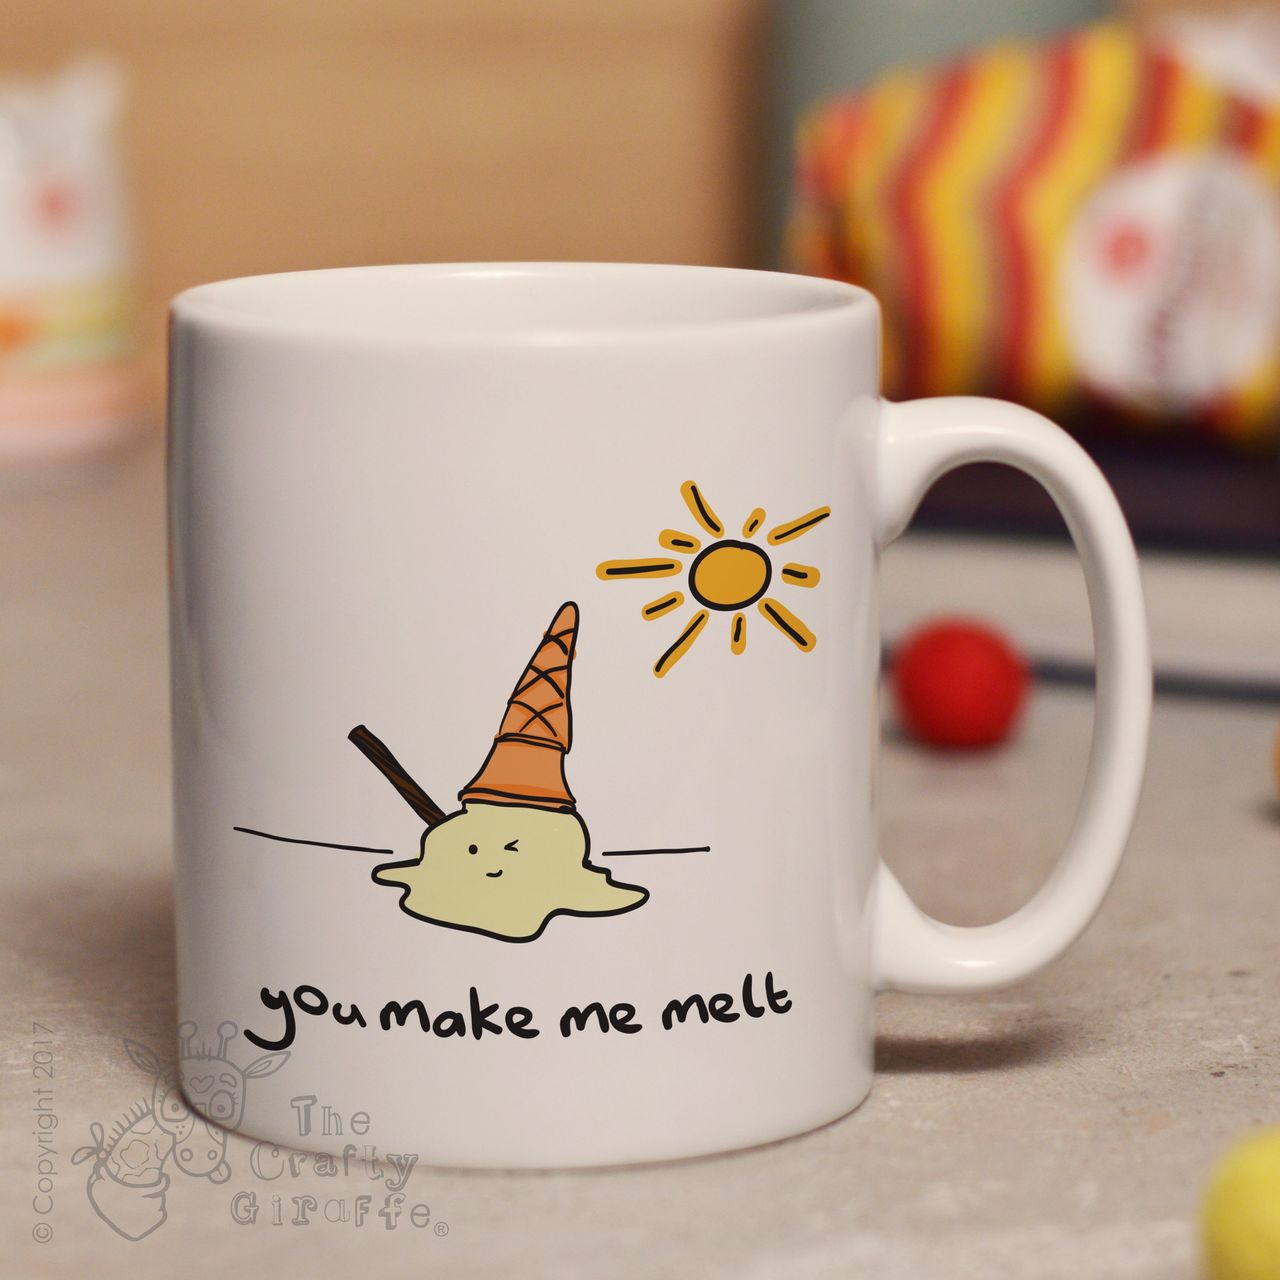 You make me melt mug